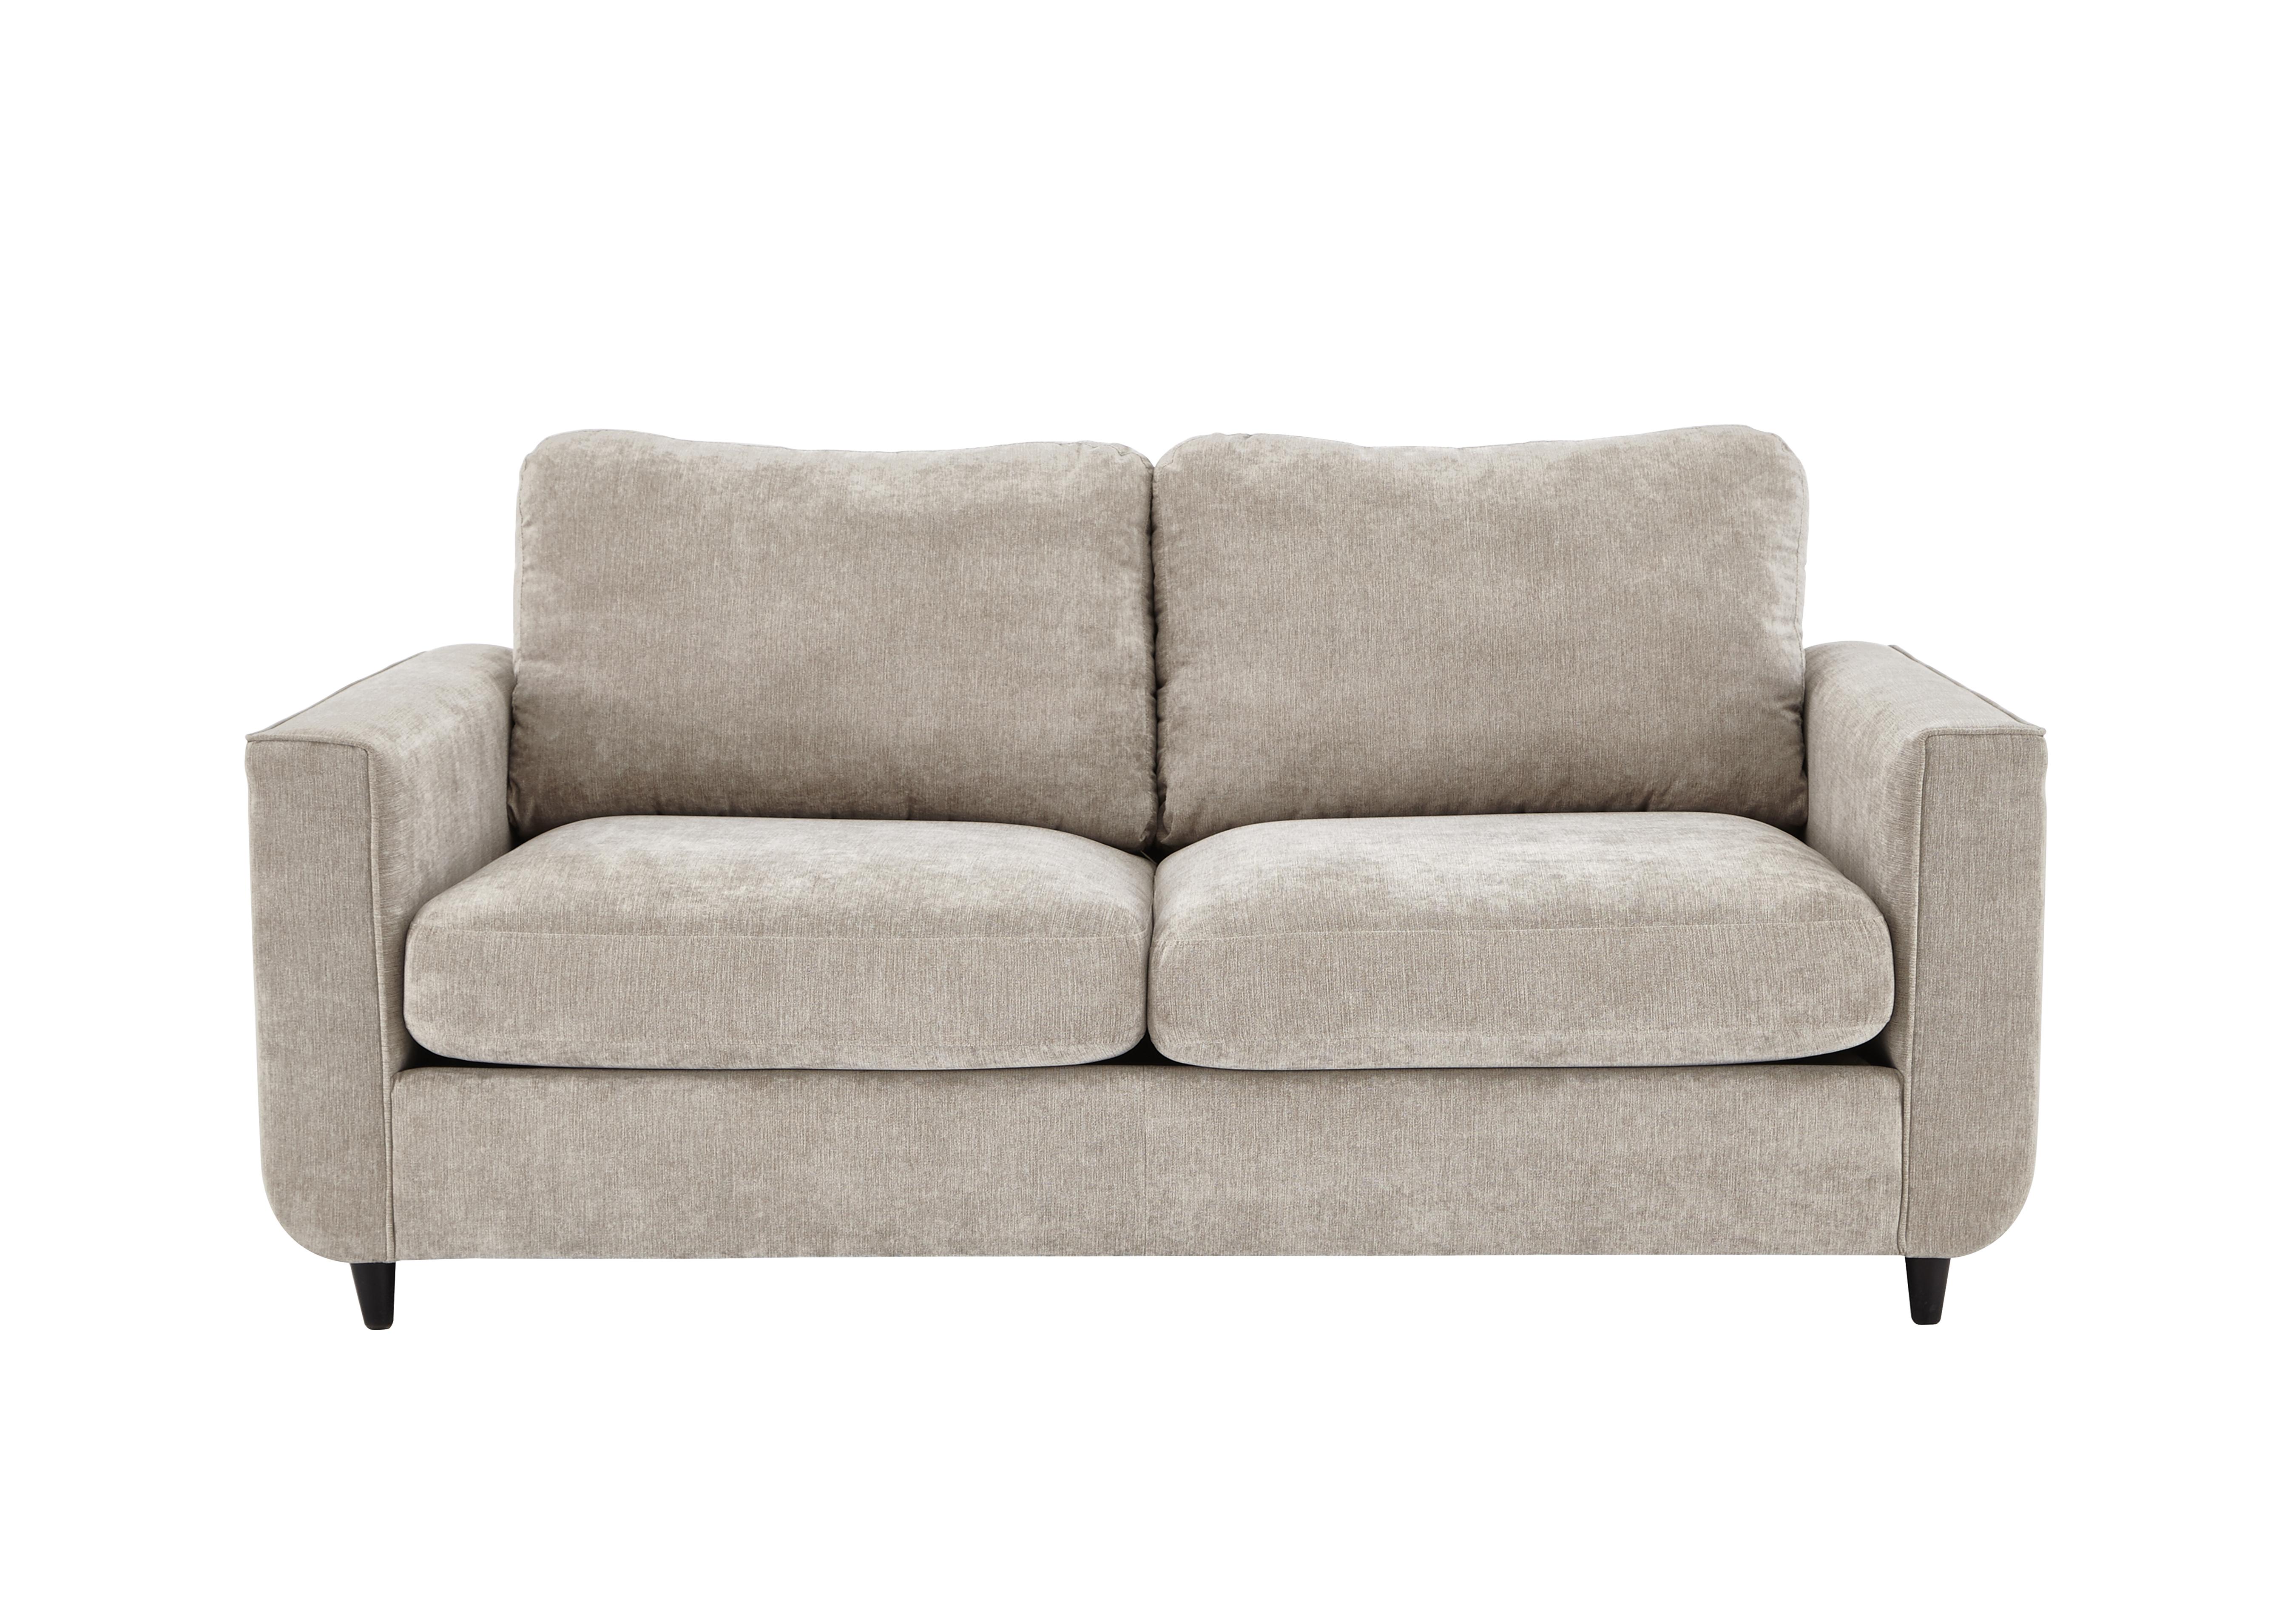 Esprit 3 Seater Fabric Sofa Bed in Silver Ebony Feet on Furniture Village